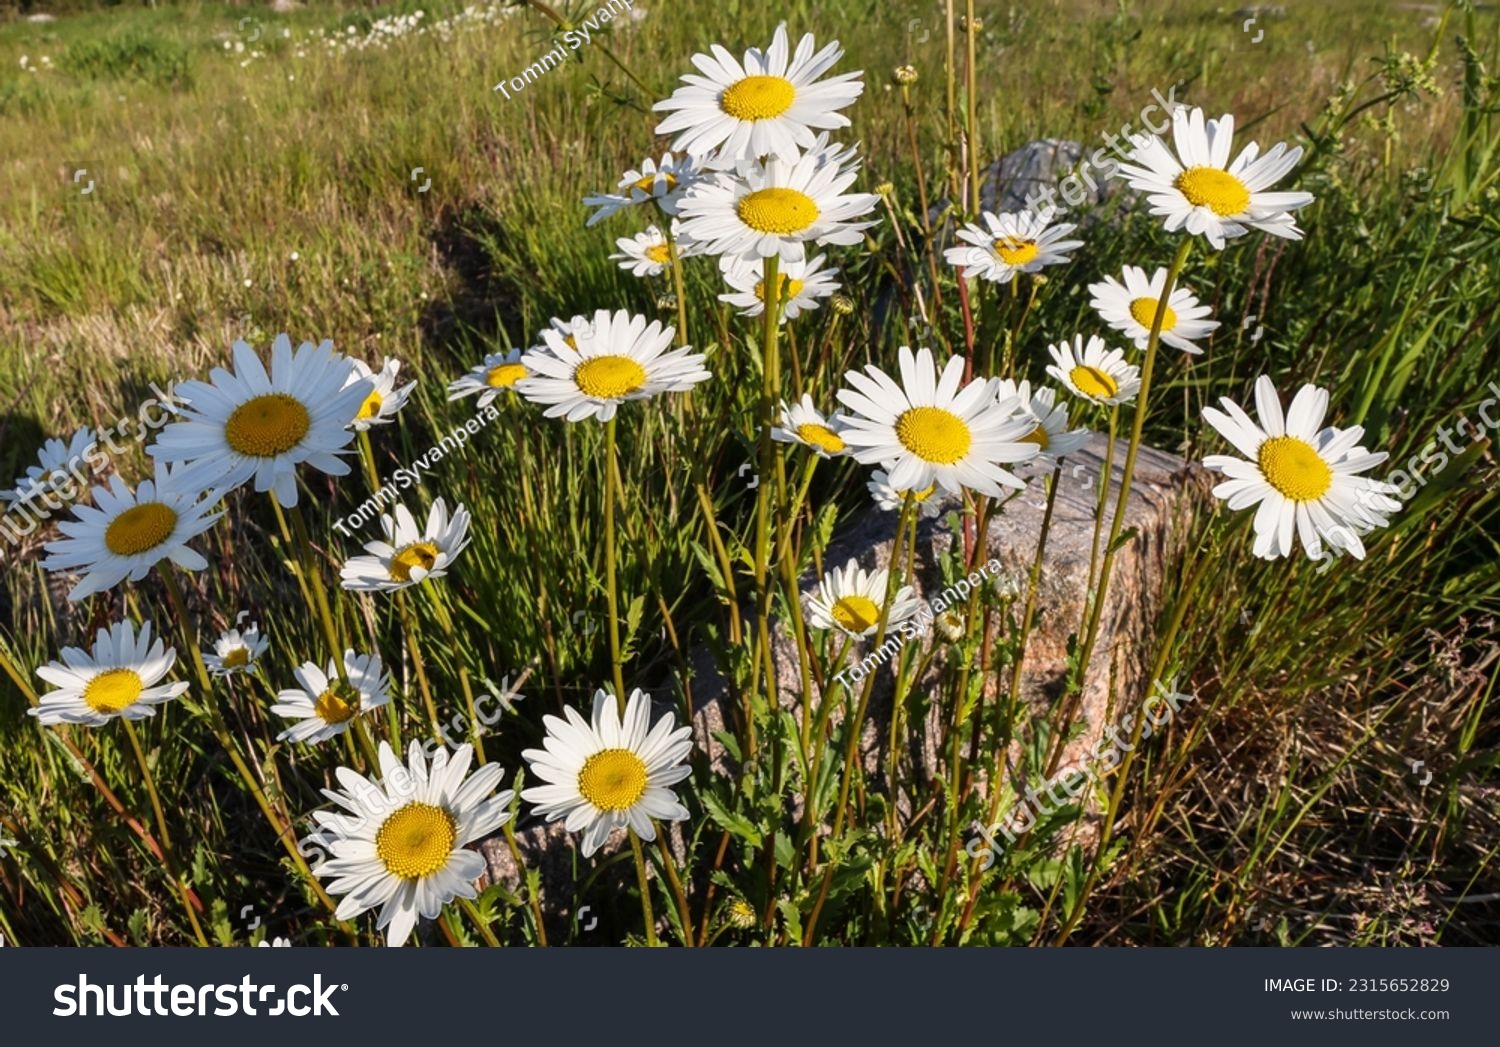 Dog daisies flowering in The meadow #2315652829